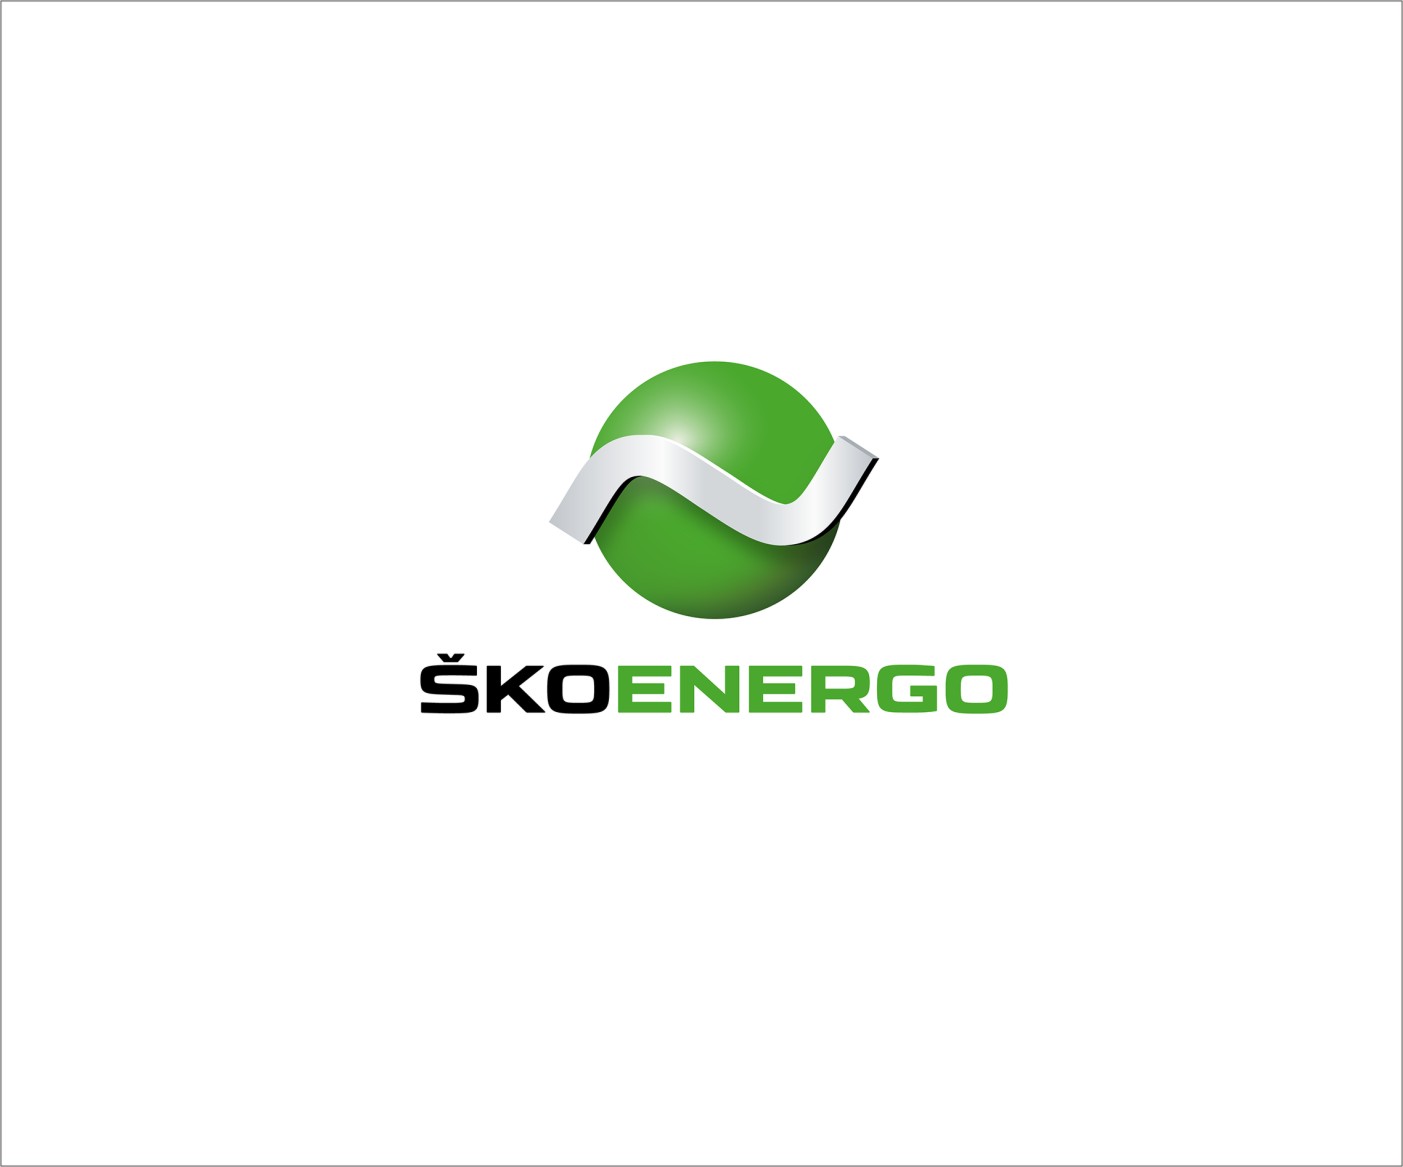 Ško-energo - logo